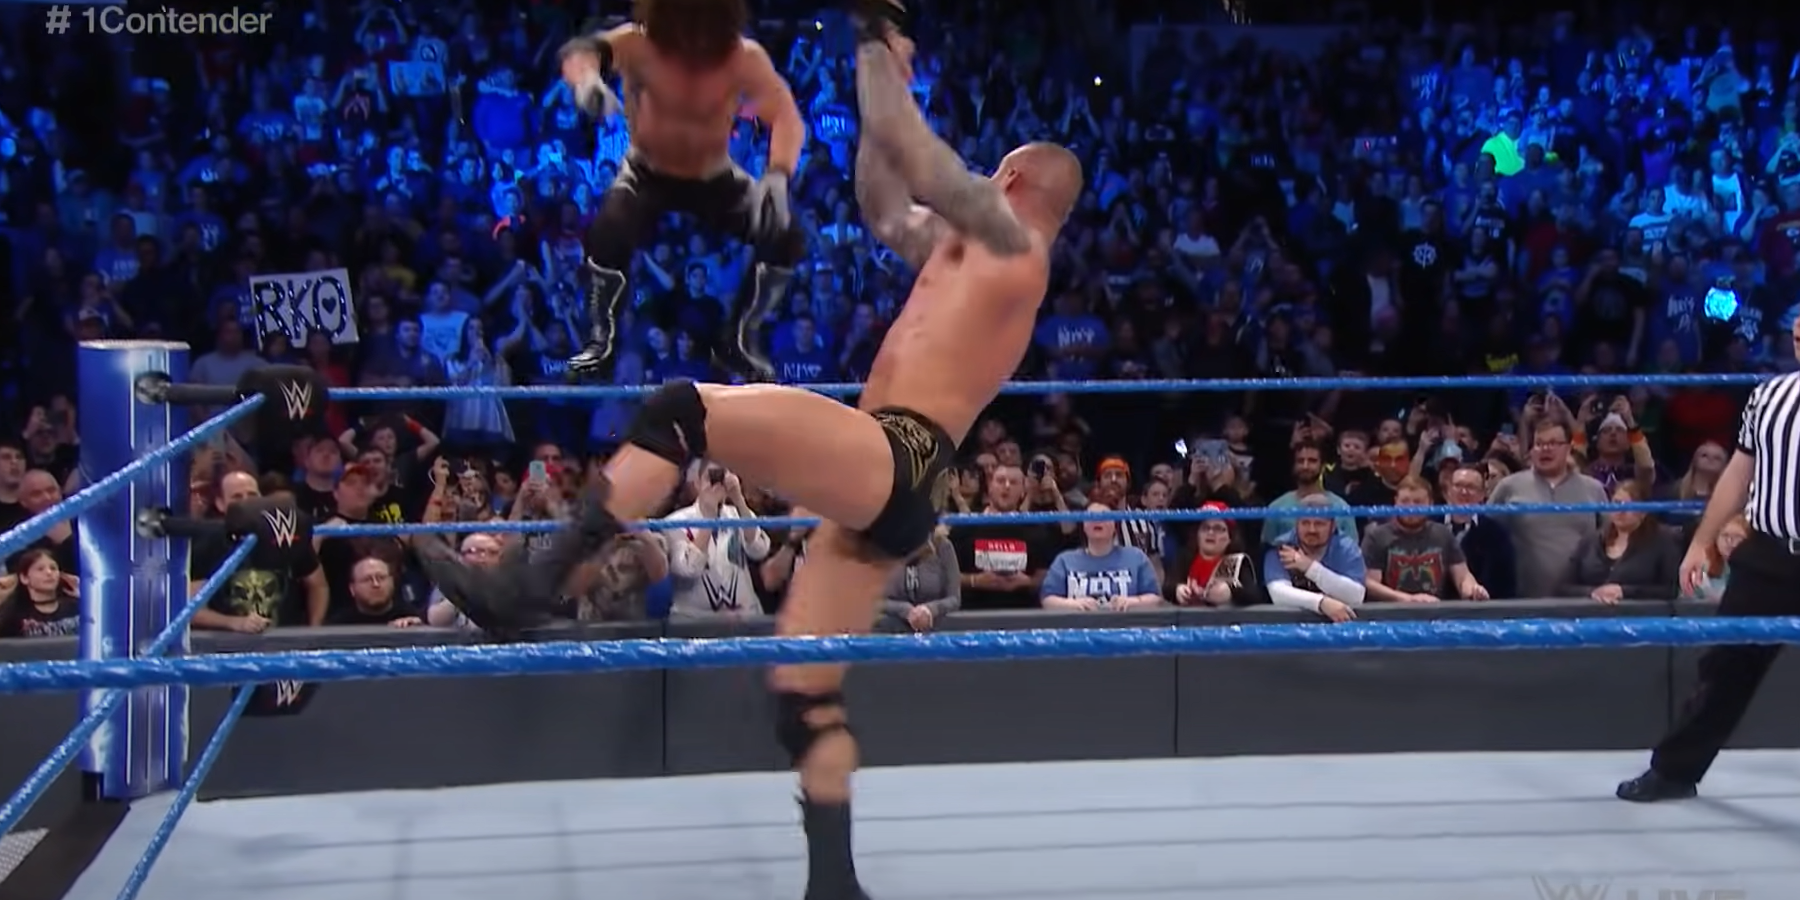 AJ Styles countering the RKO